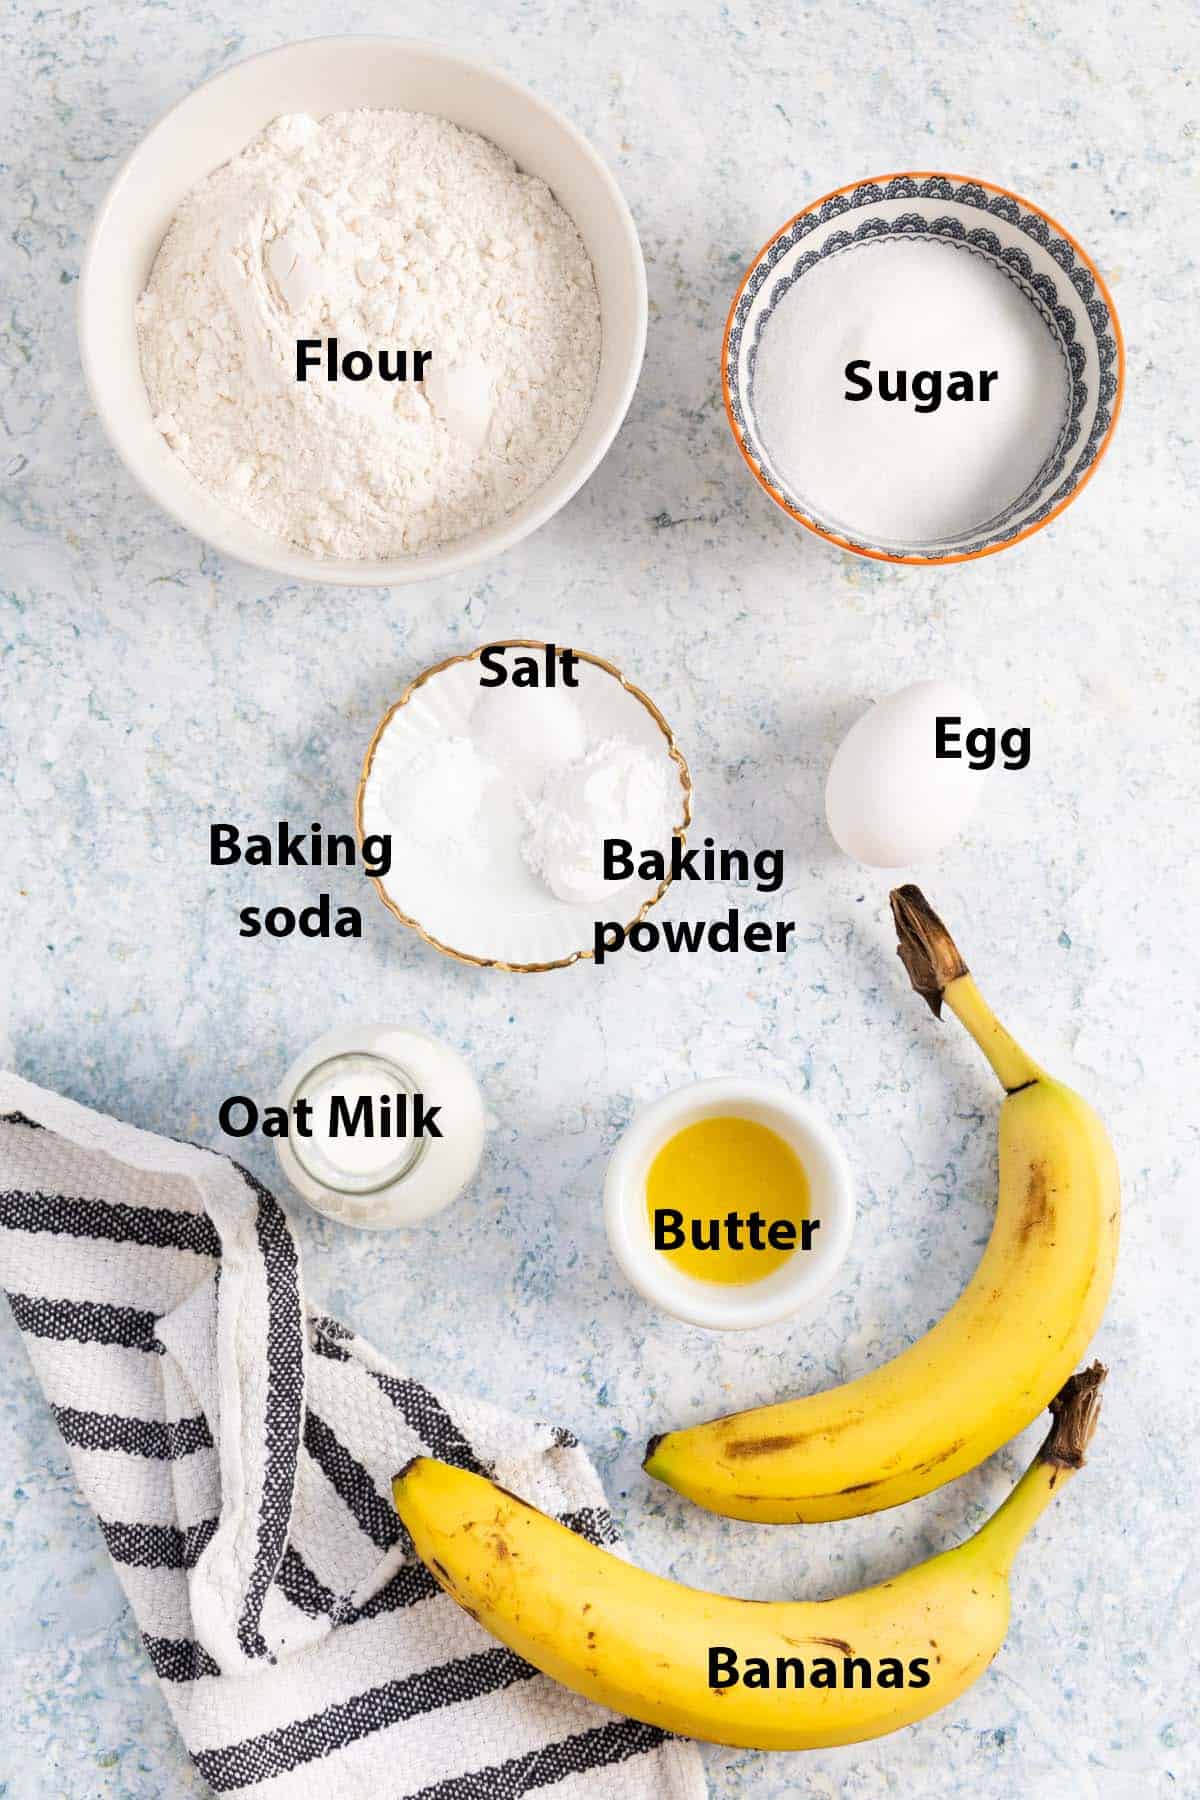 ingredients labelled: ripe banana, butter, oat milk, flour, baking soda, egg, baking powder, salt and sugar. 